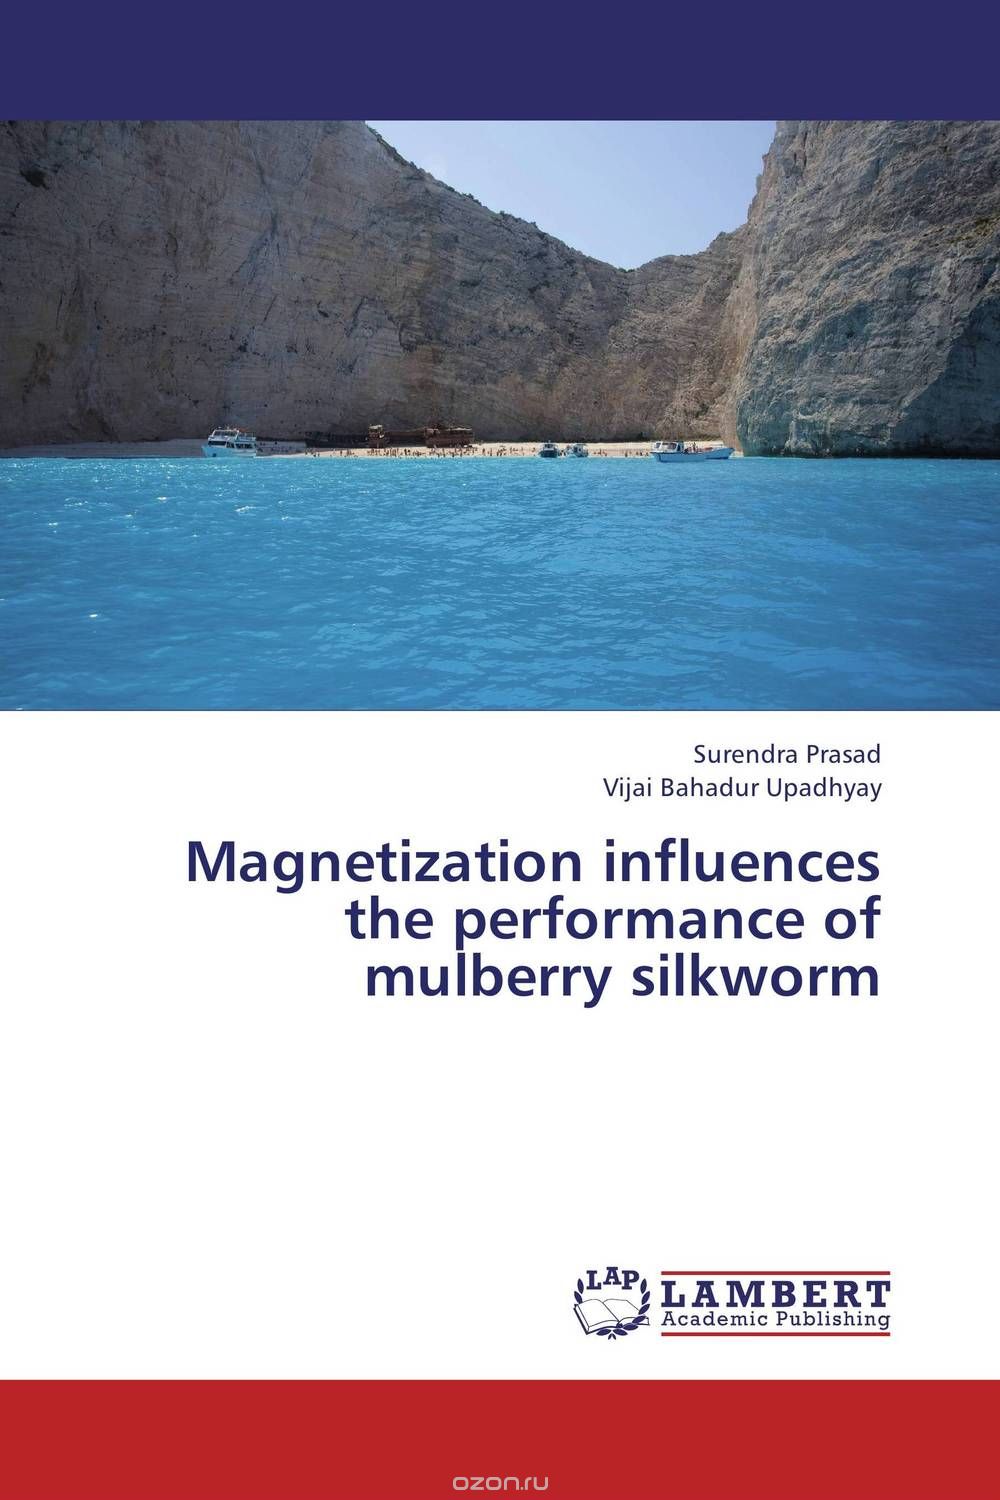 Скачать книгу "Magnetization influences the performance of  mulberry silkworm"